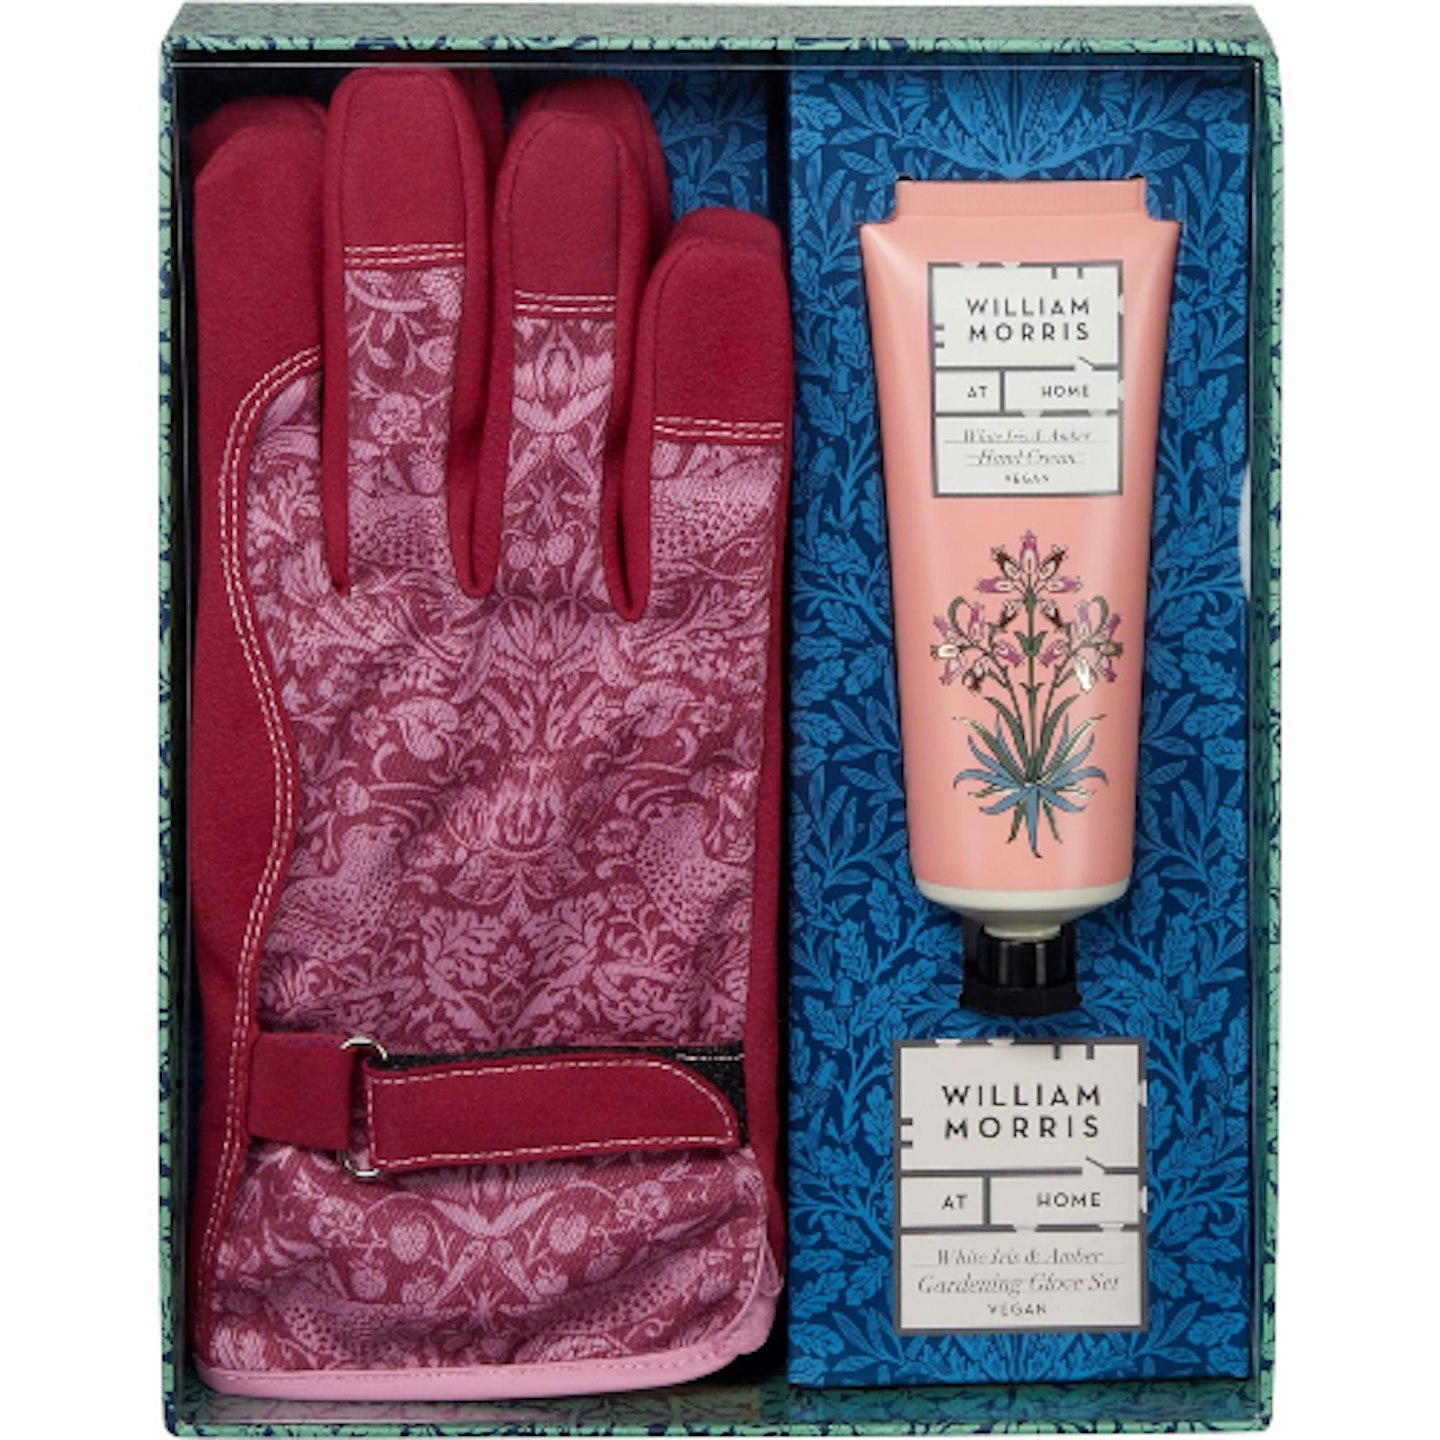 William Morris gardening gloves